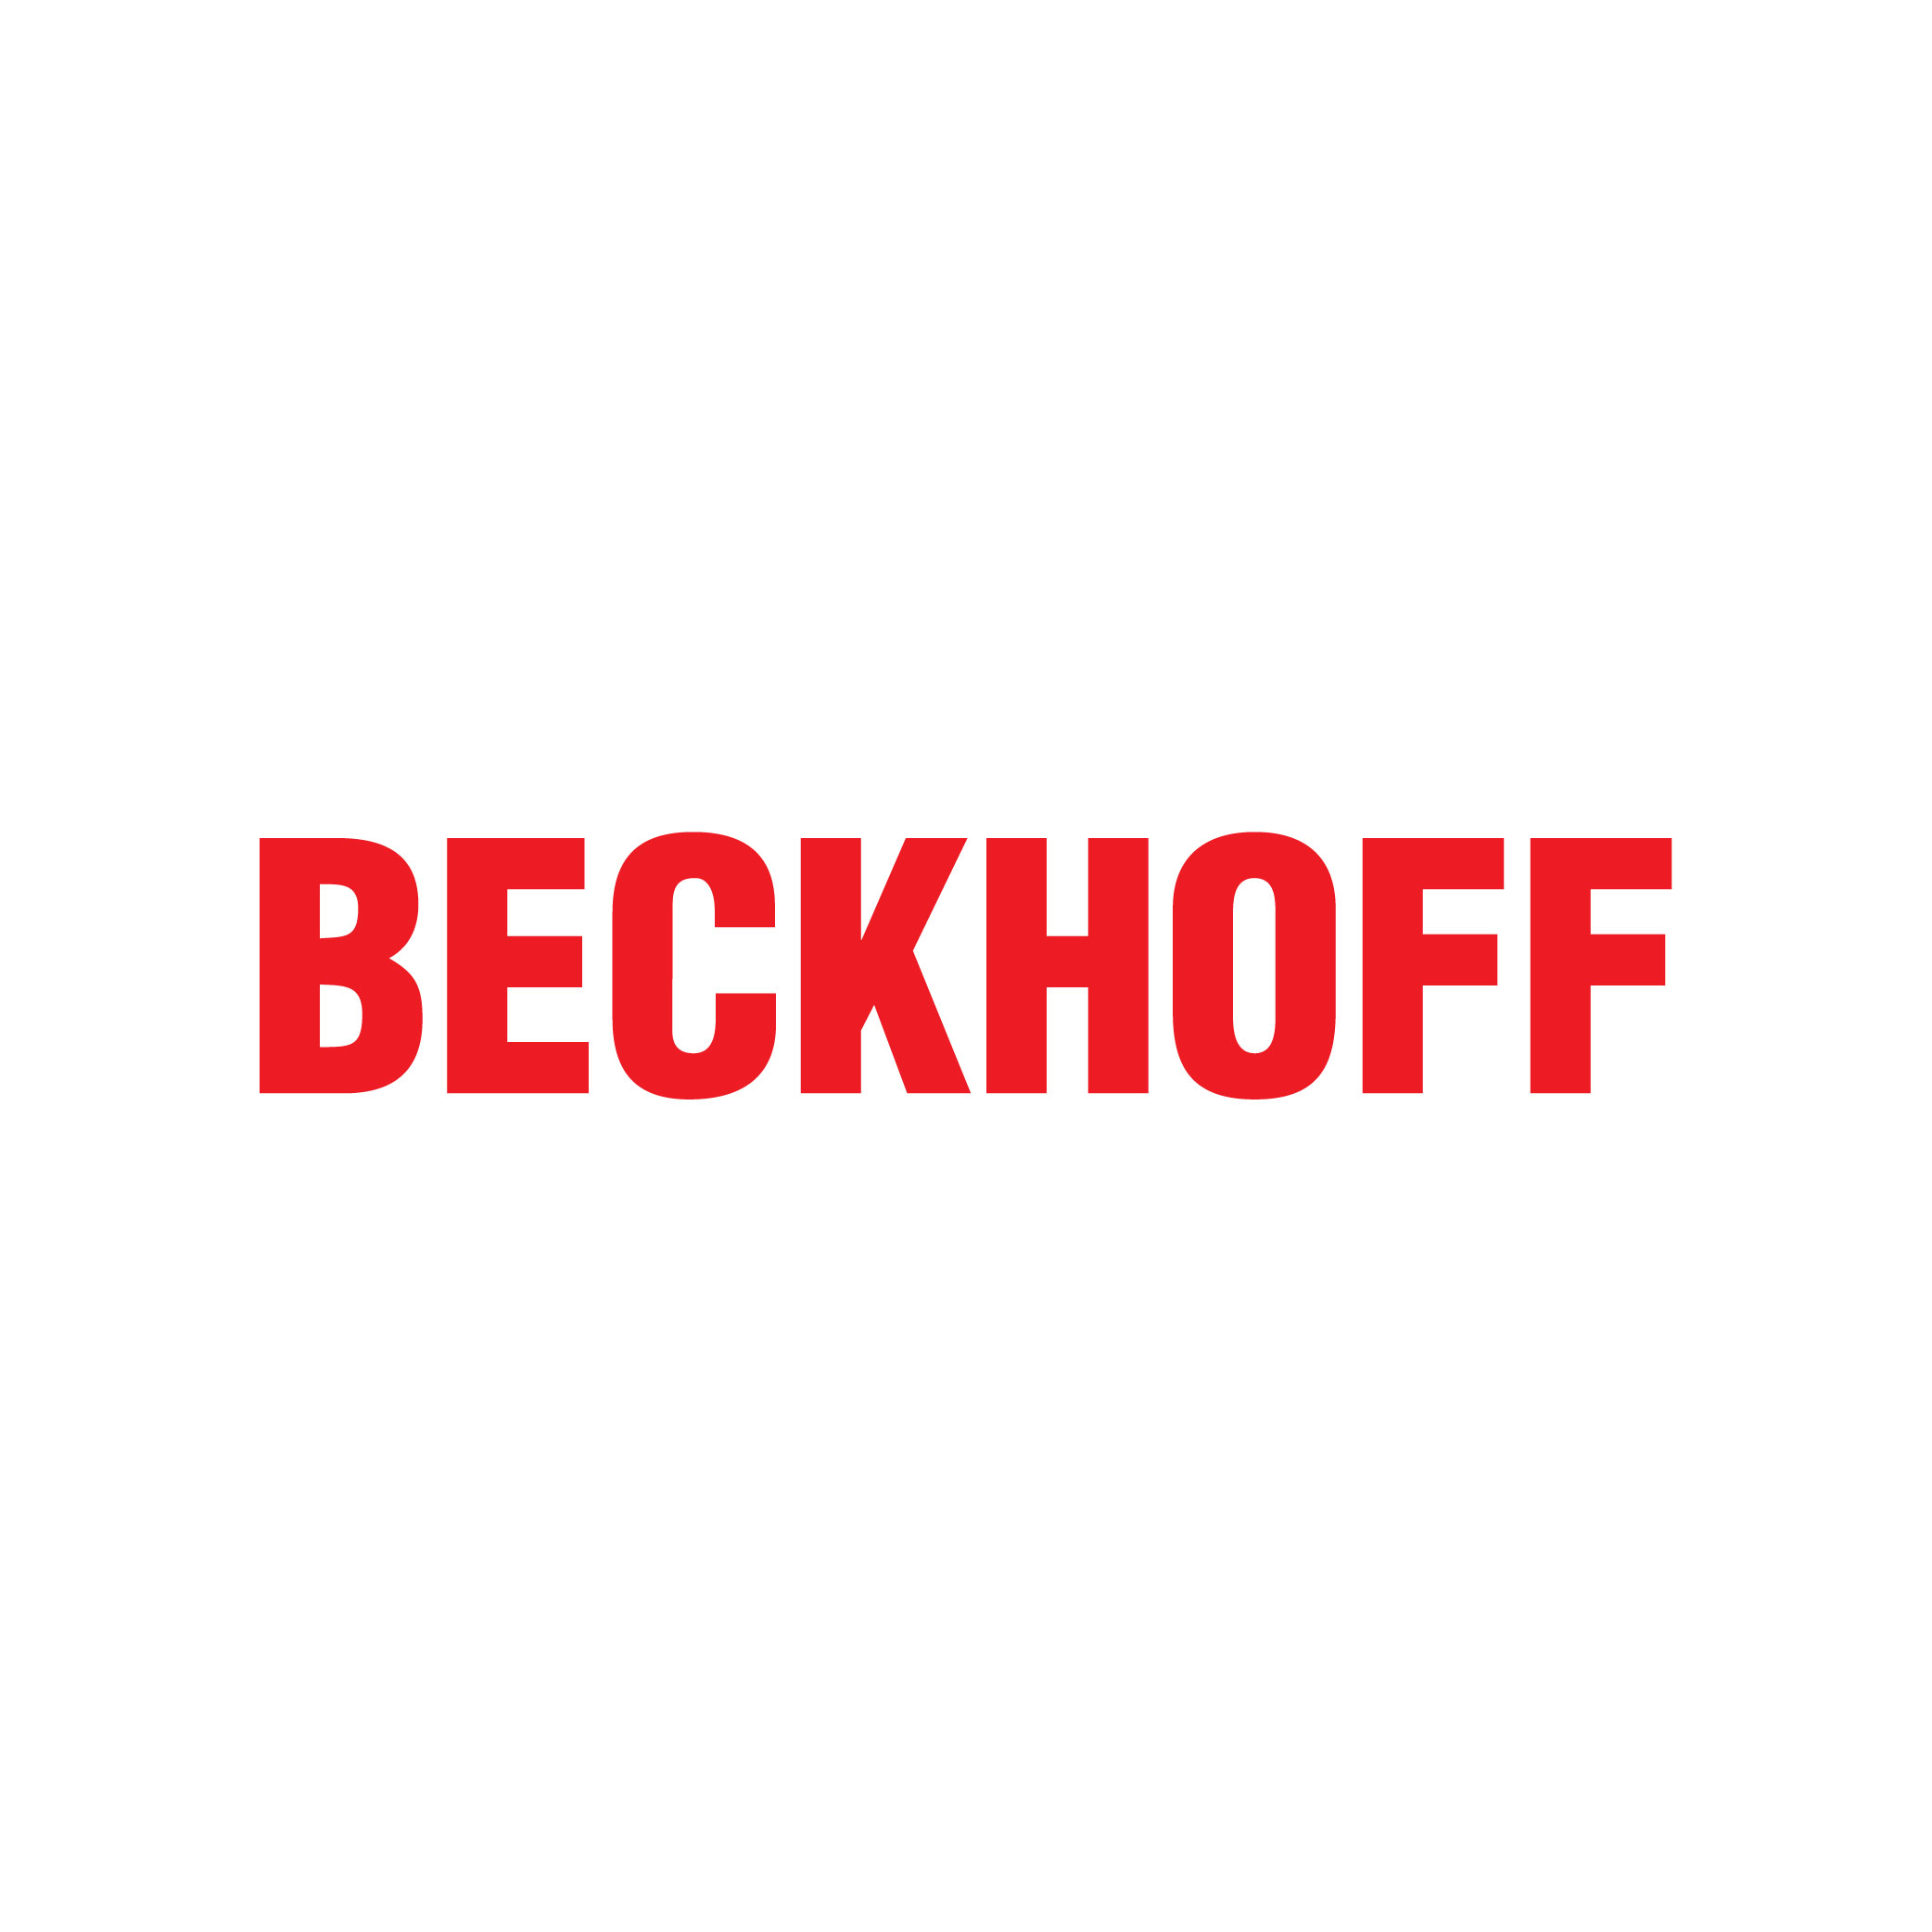 BECKHOFF logo.jpg